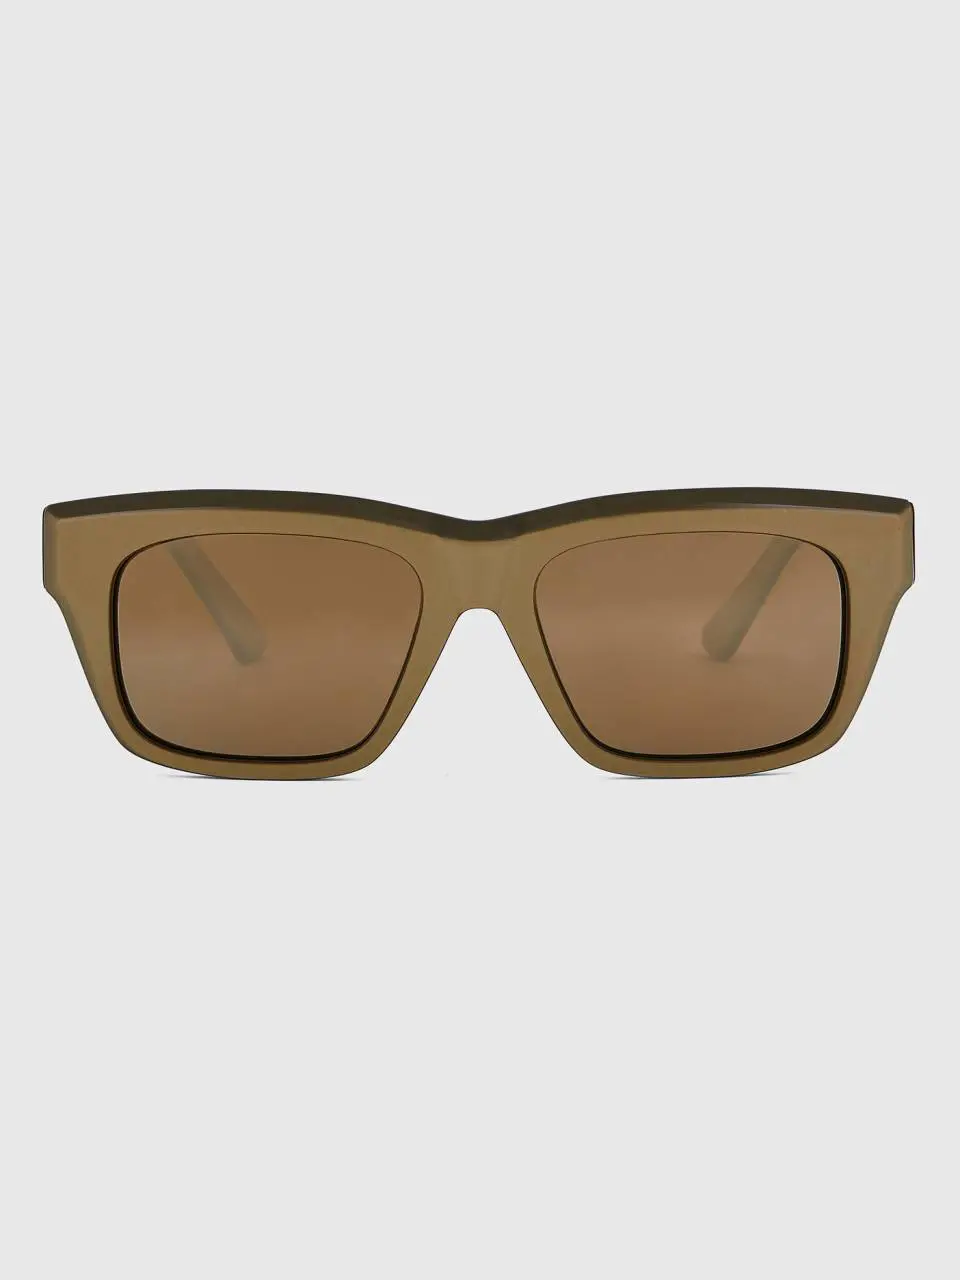 Benetton gold sunglasses. 1